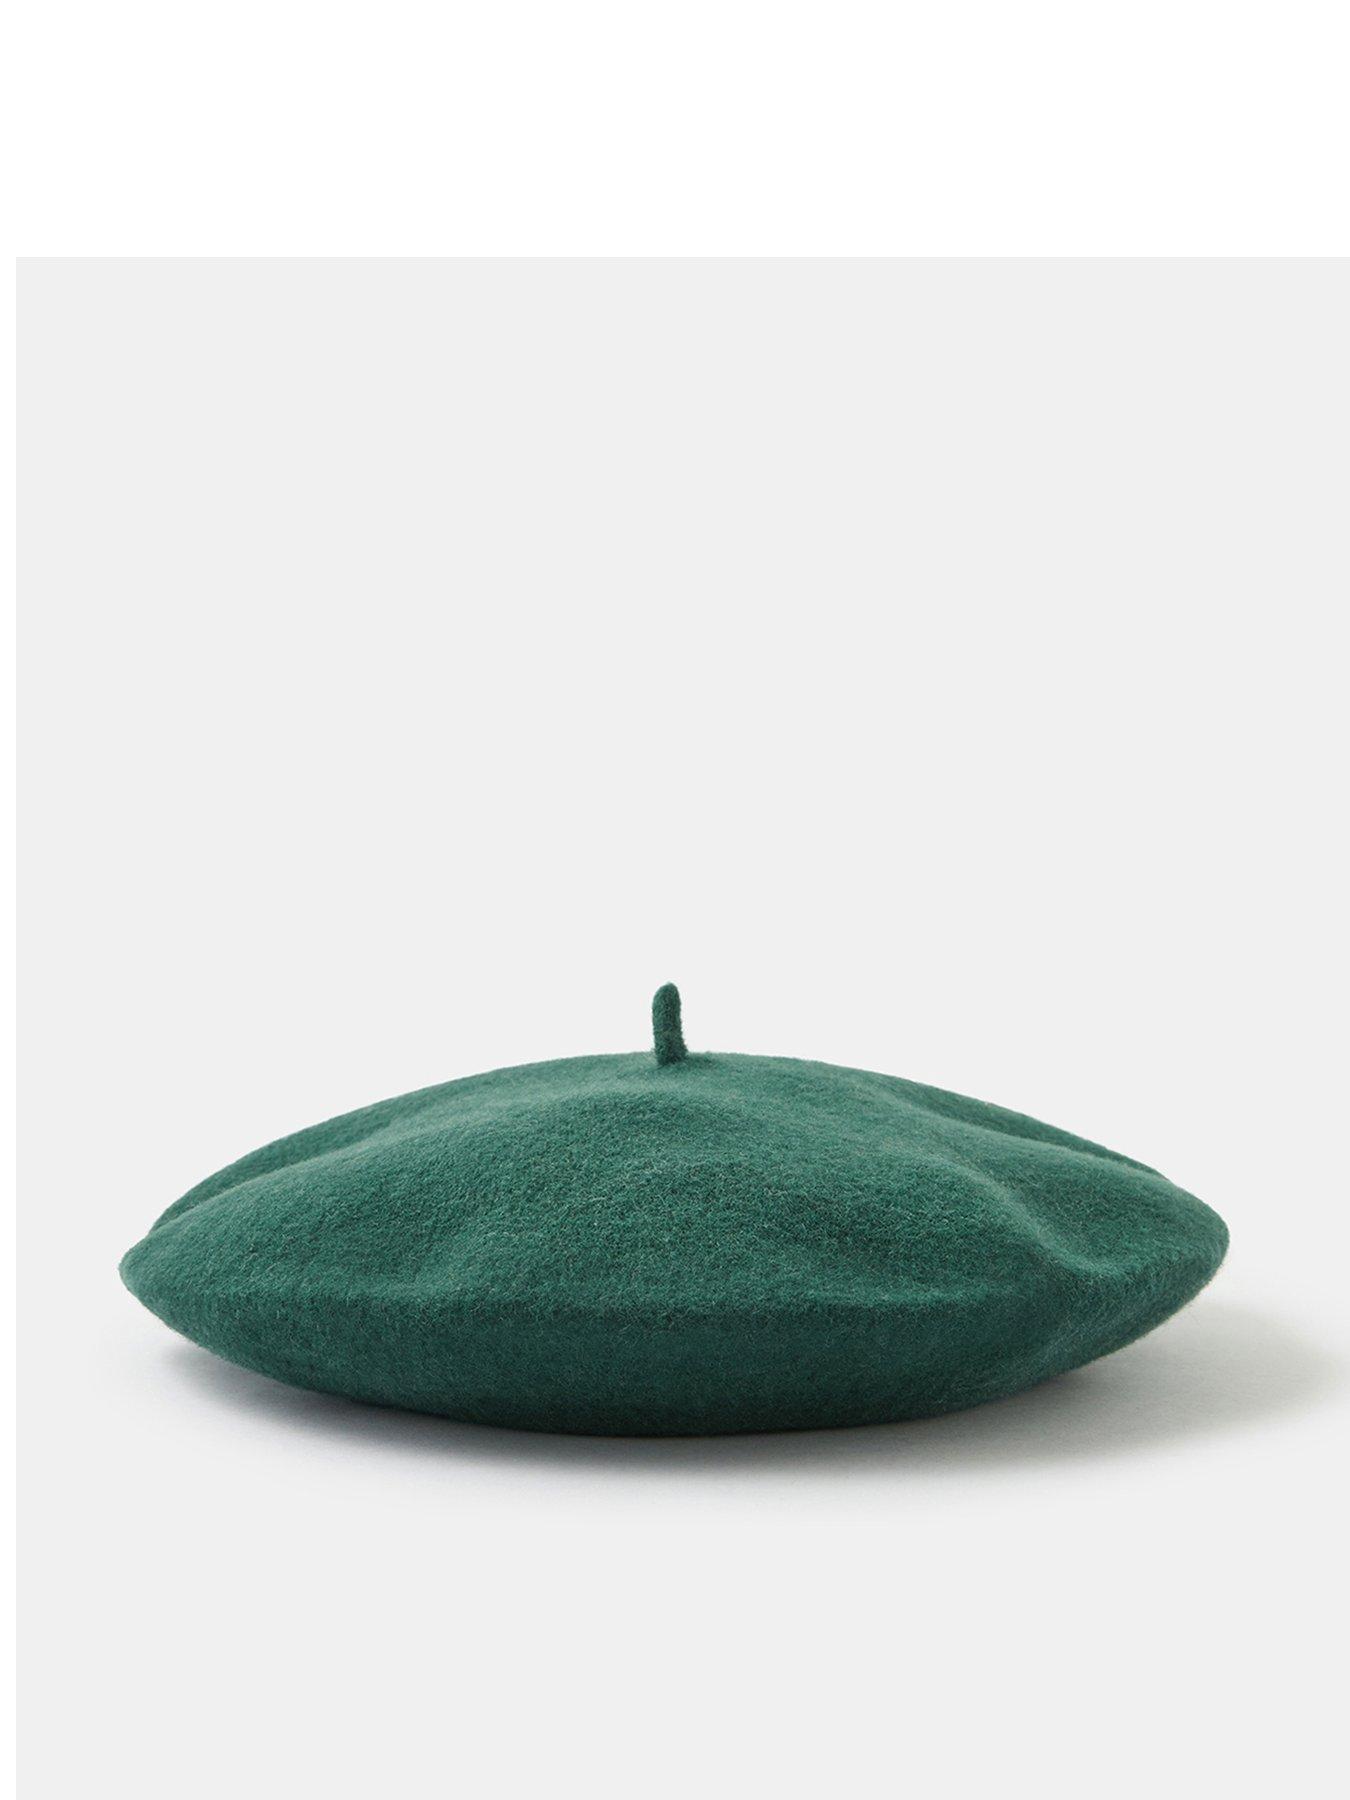 Benetton Green beret discount 62% Green Single WOMEN FASHION Accessories Hat and cap Green 